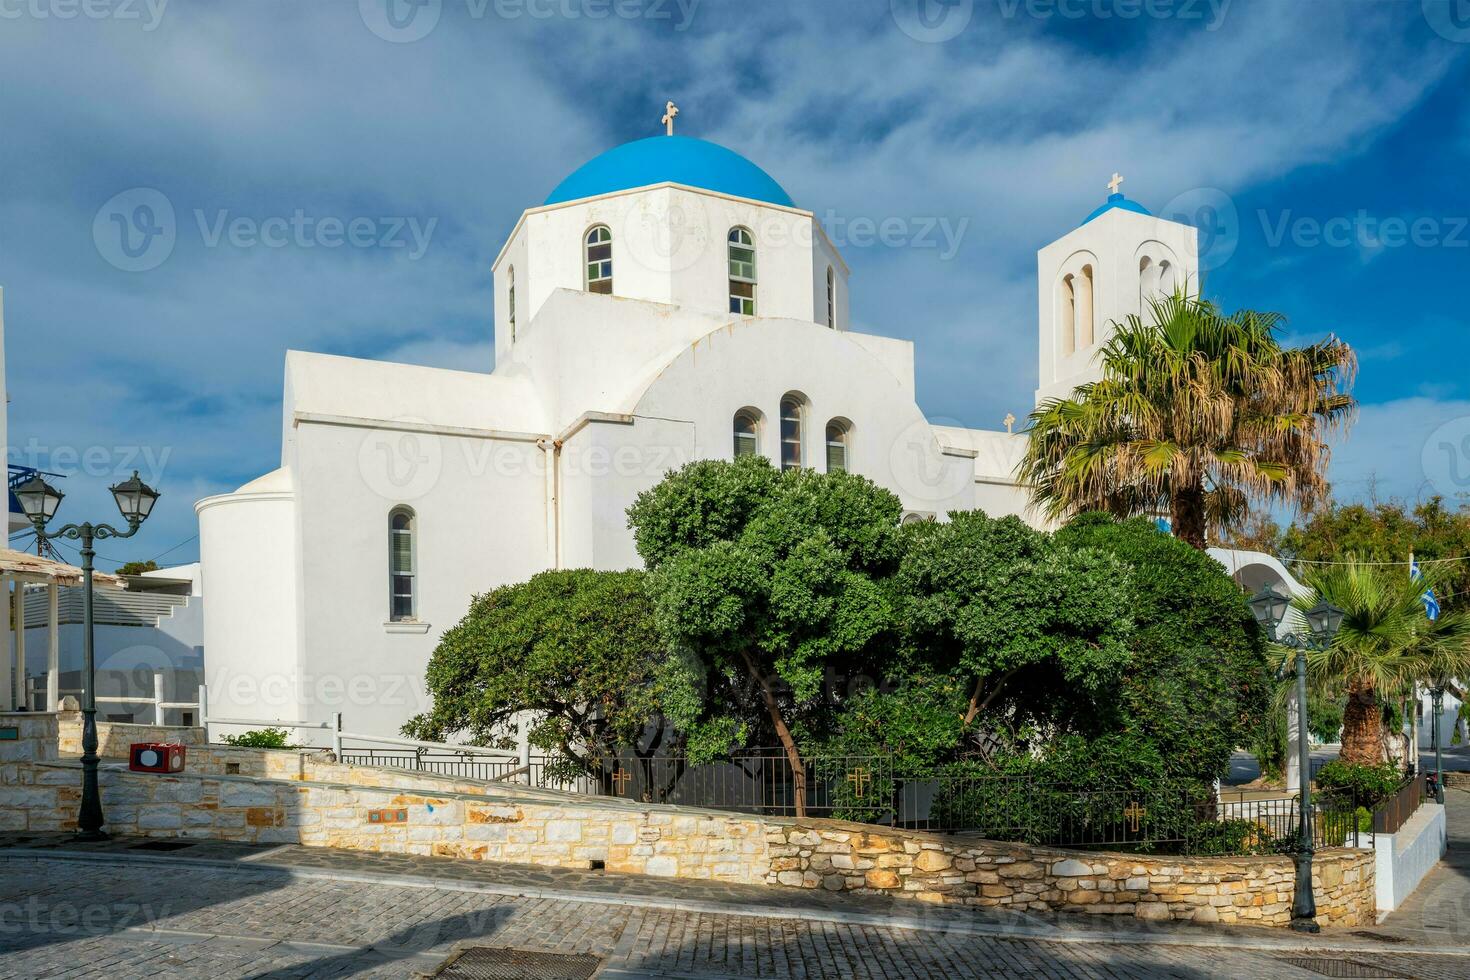 Naoussa cittadina Chiesa su par isola, Grecia foto